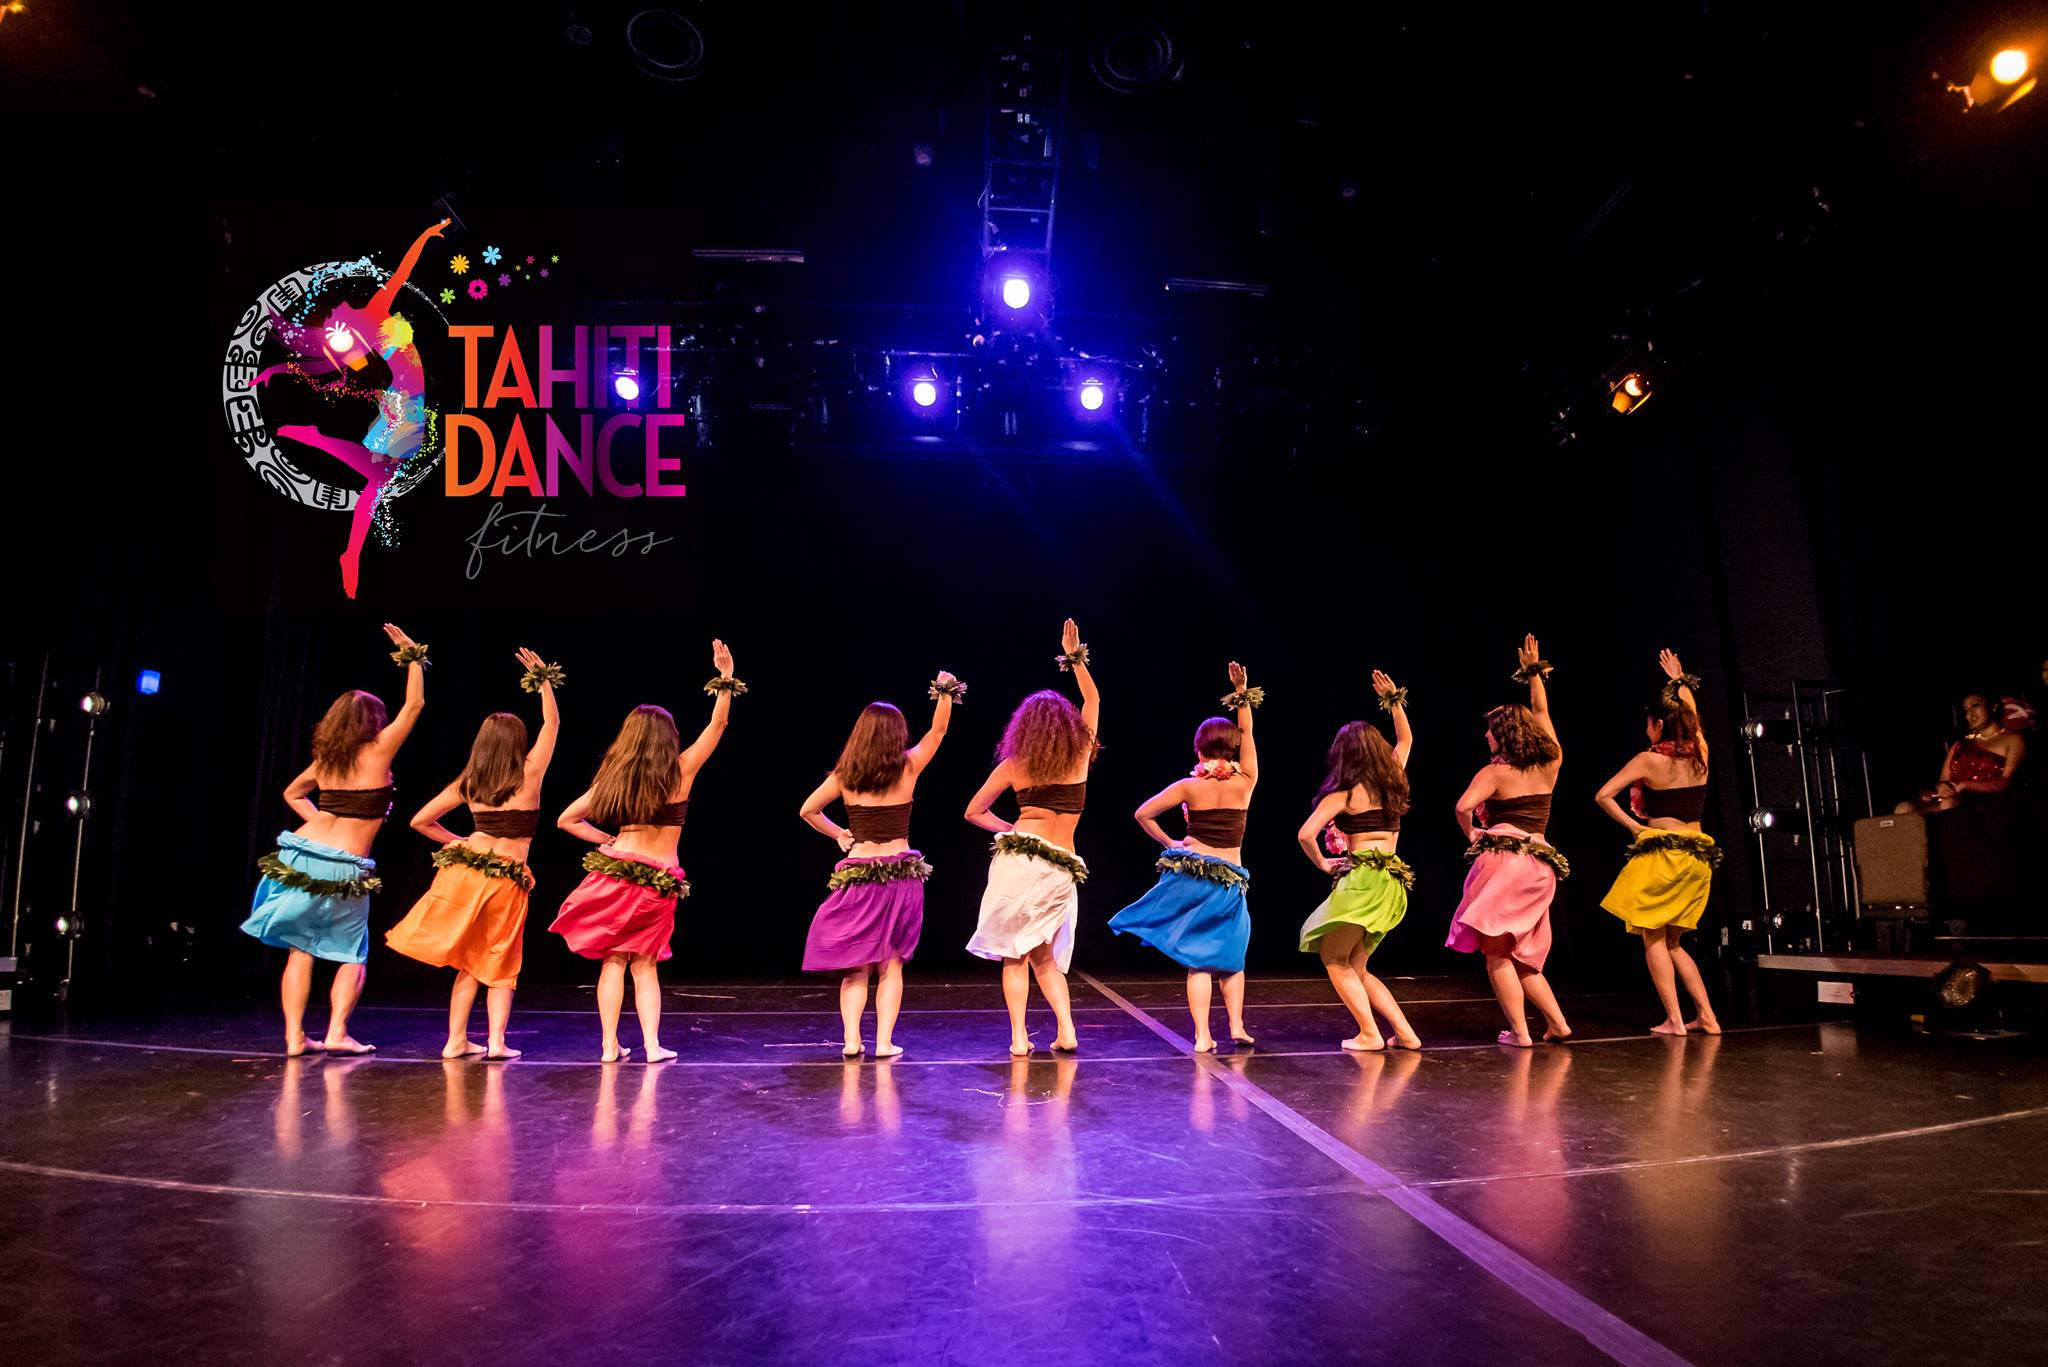 Tahiti Dance Fitness Danceathon – 1st Polynesian Dance Fitness Danceathon in Asia!